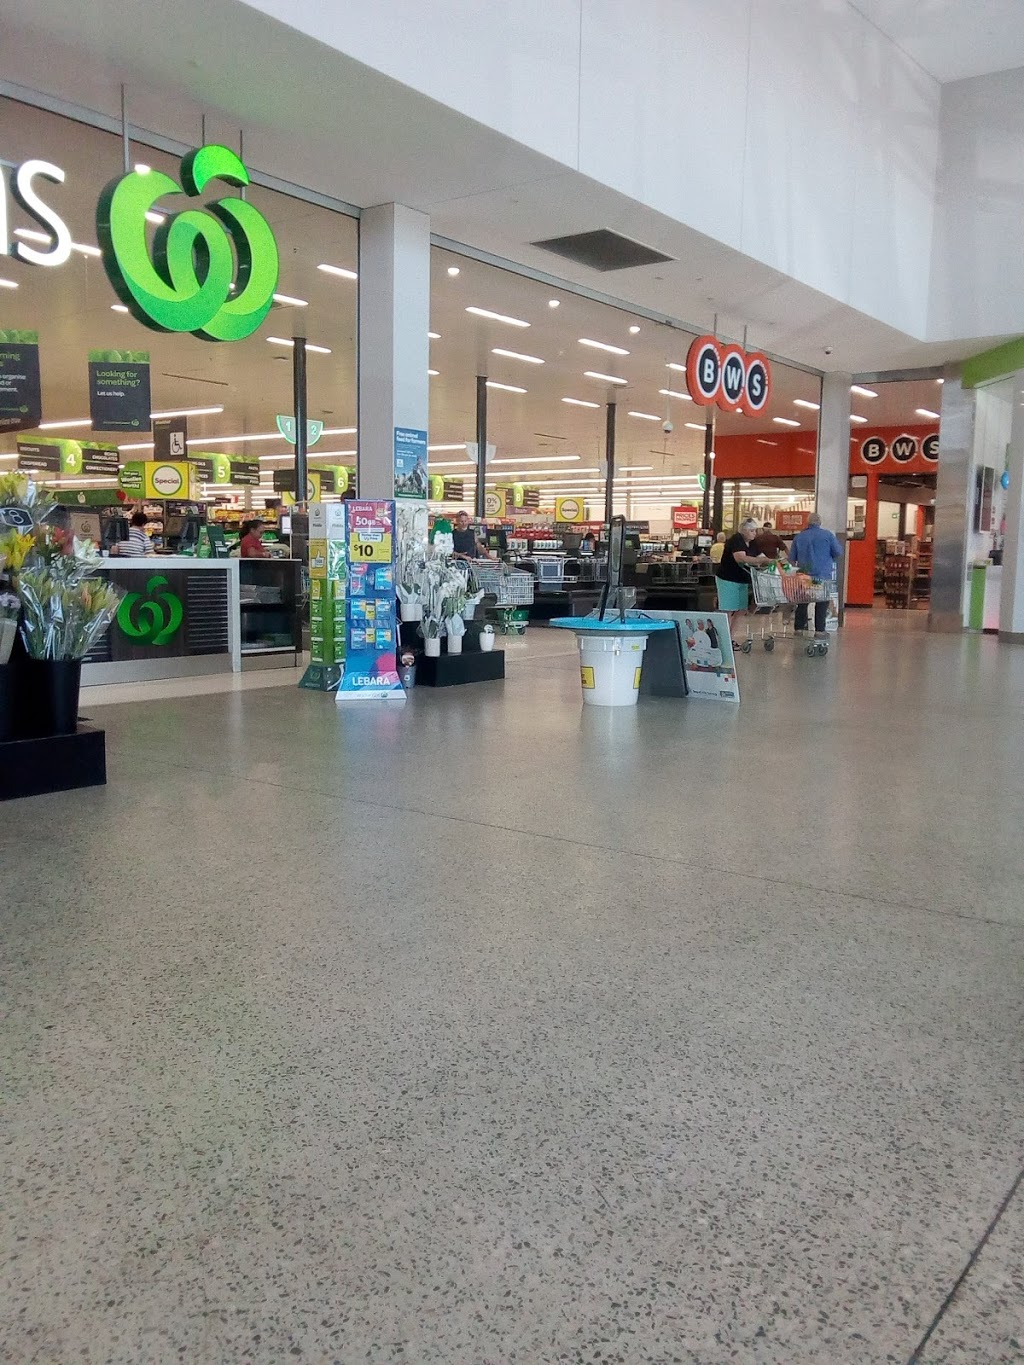 Woolworths Mandurah Greenfields | supermarket | 2 Eaglemont Street, Greenfields WA 6210, Australia | 0895866513 OR +61 8 9586 6513